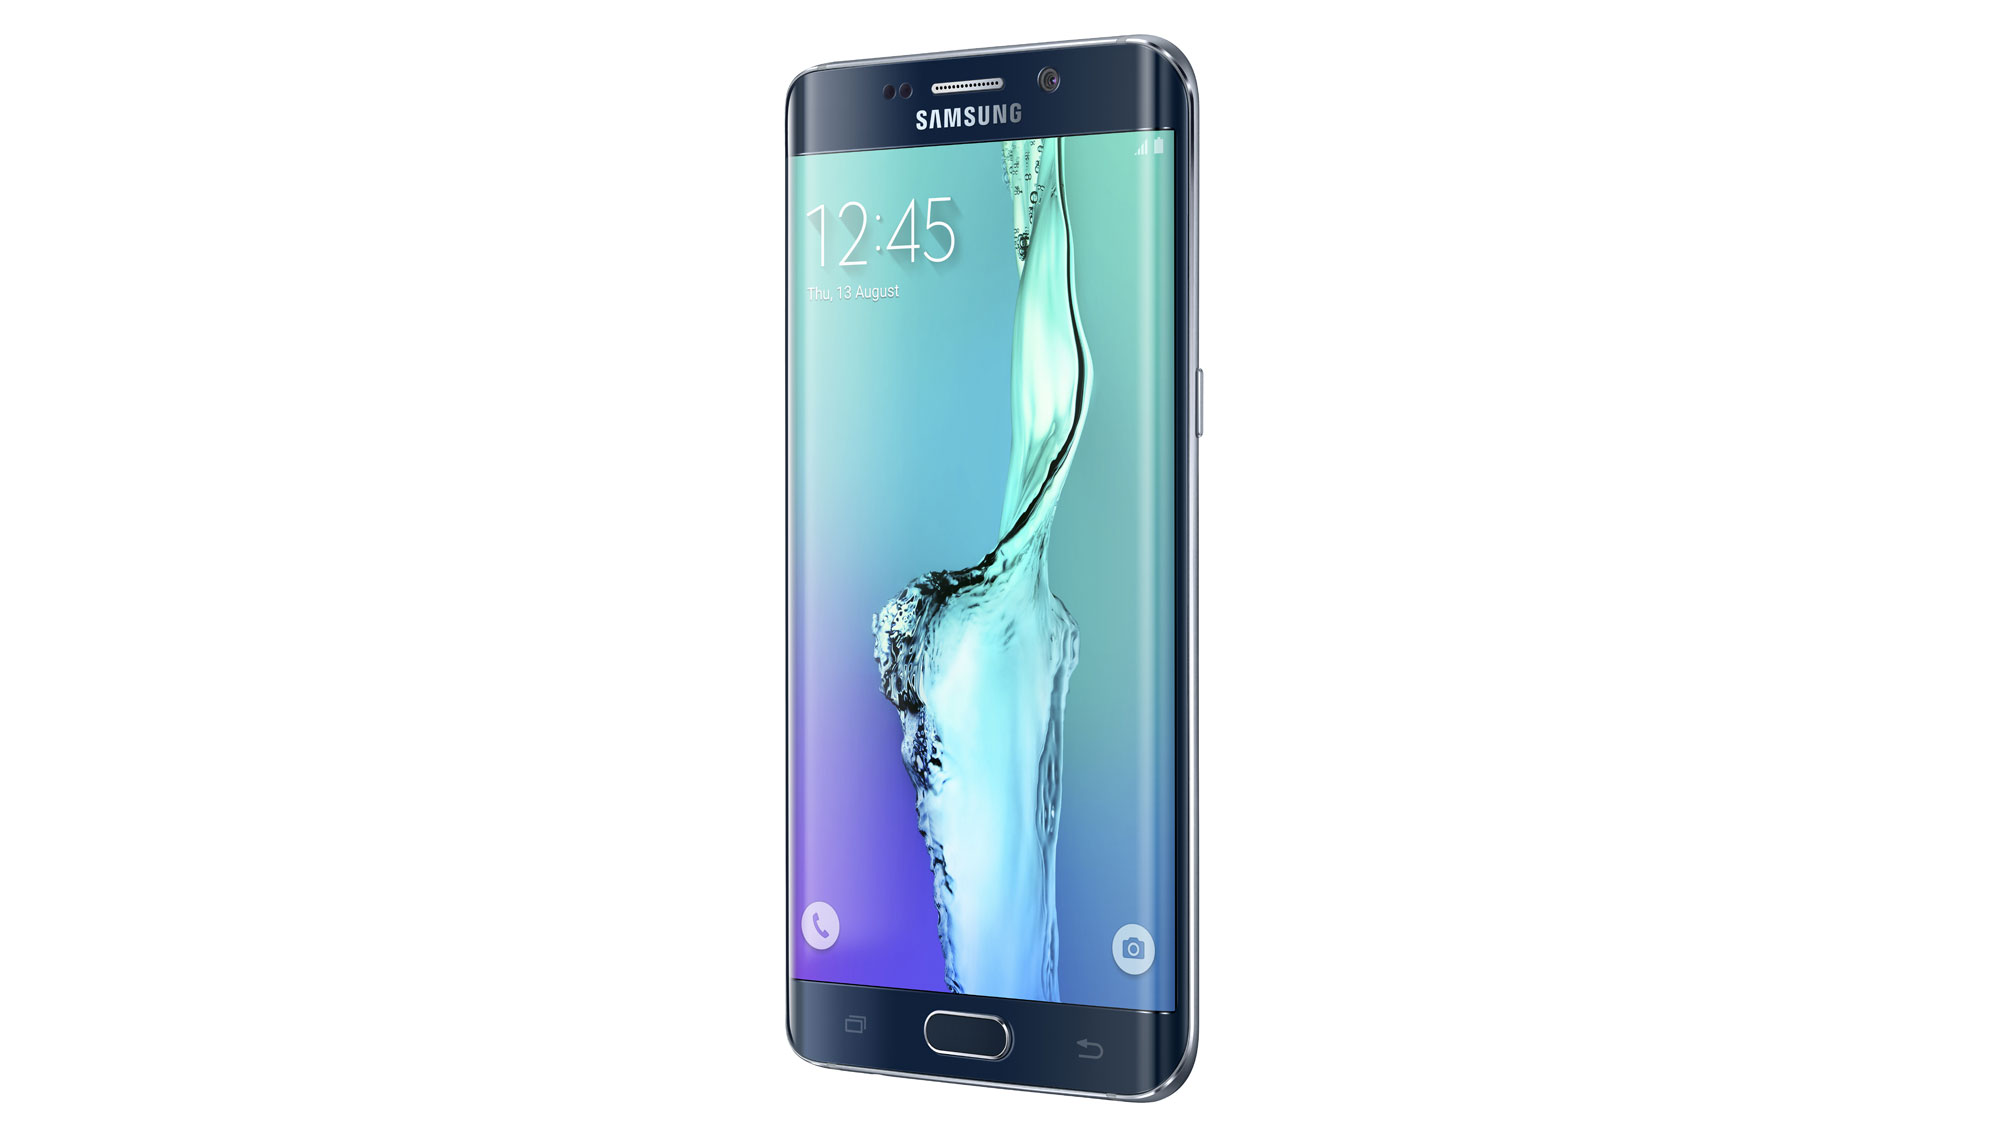 Samsung Galaxy S6 Edge Vs Iphone 6 Plus Vs Nexus 6 Vs Lg G4 The